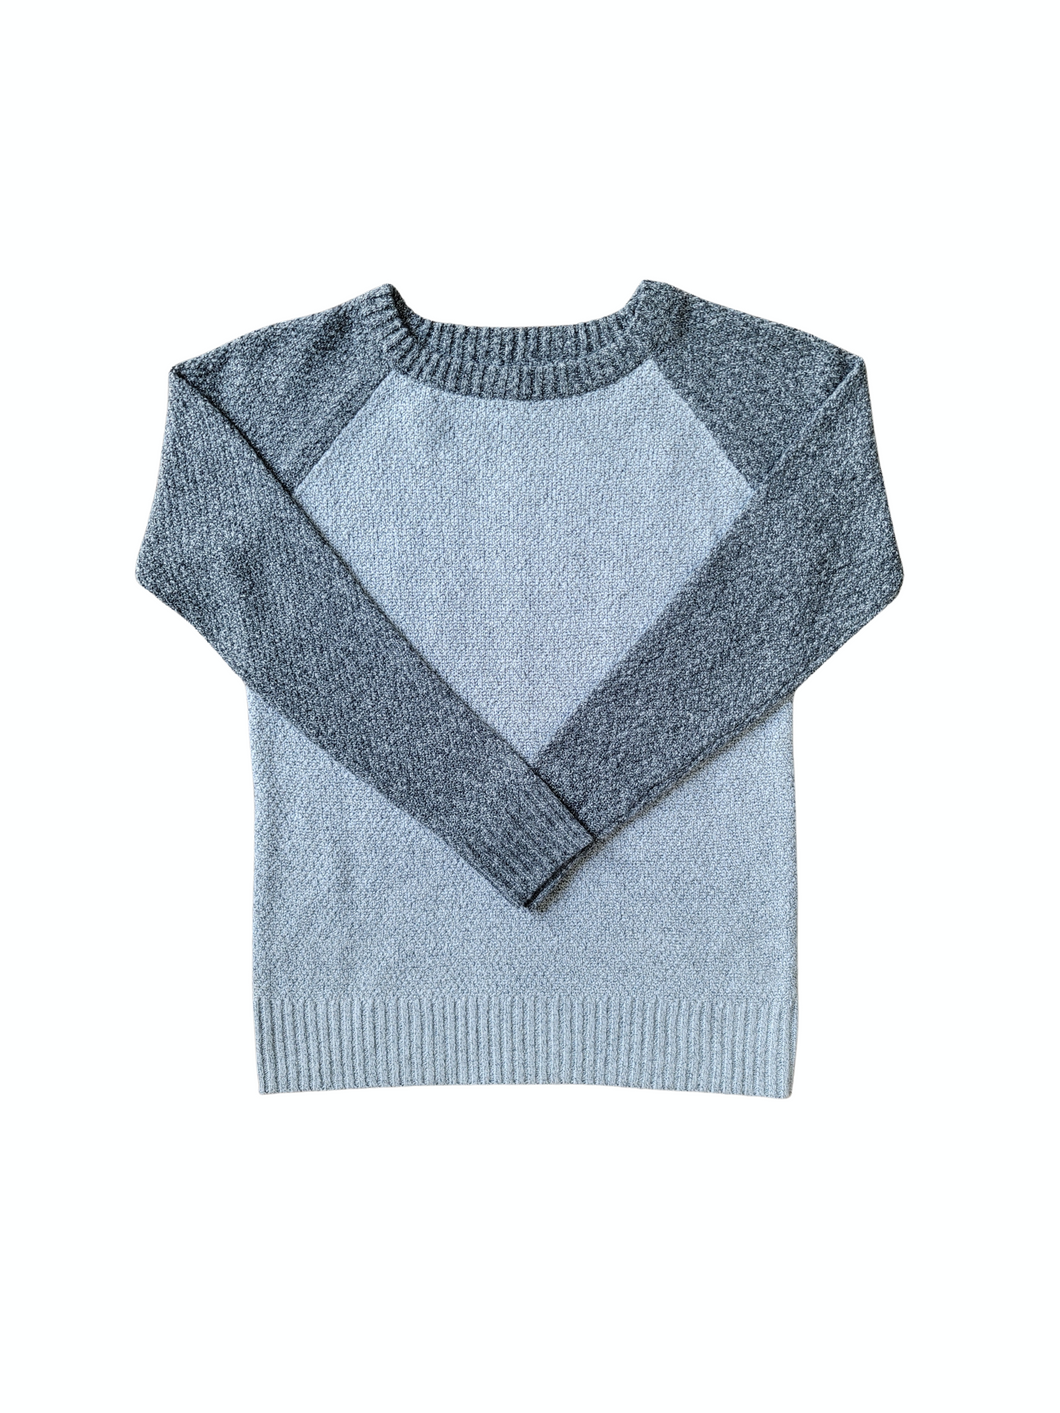 Maverick Sweater in Grey